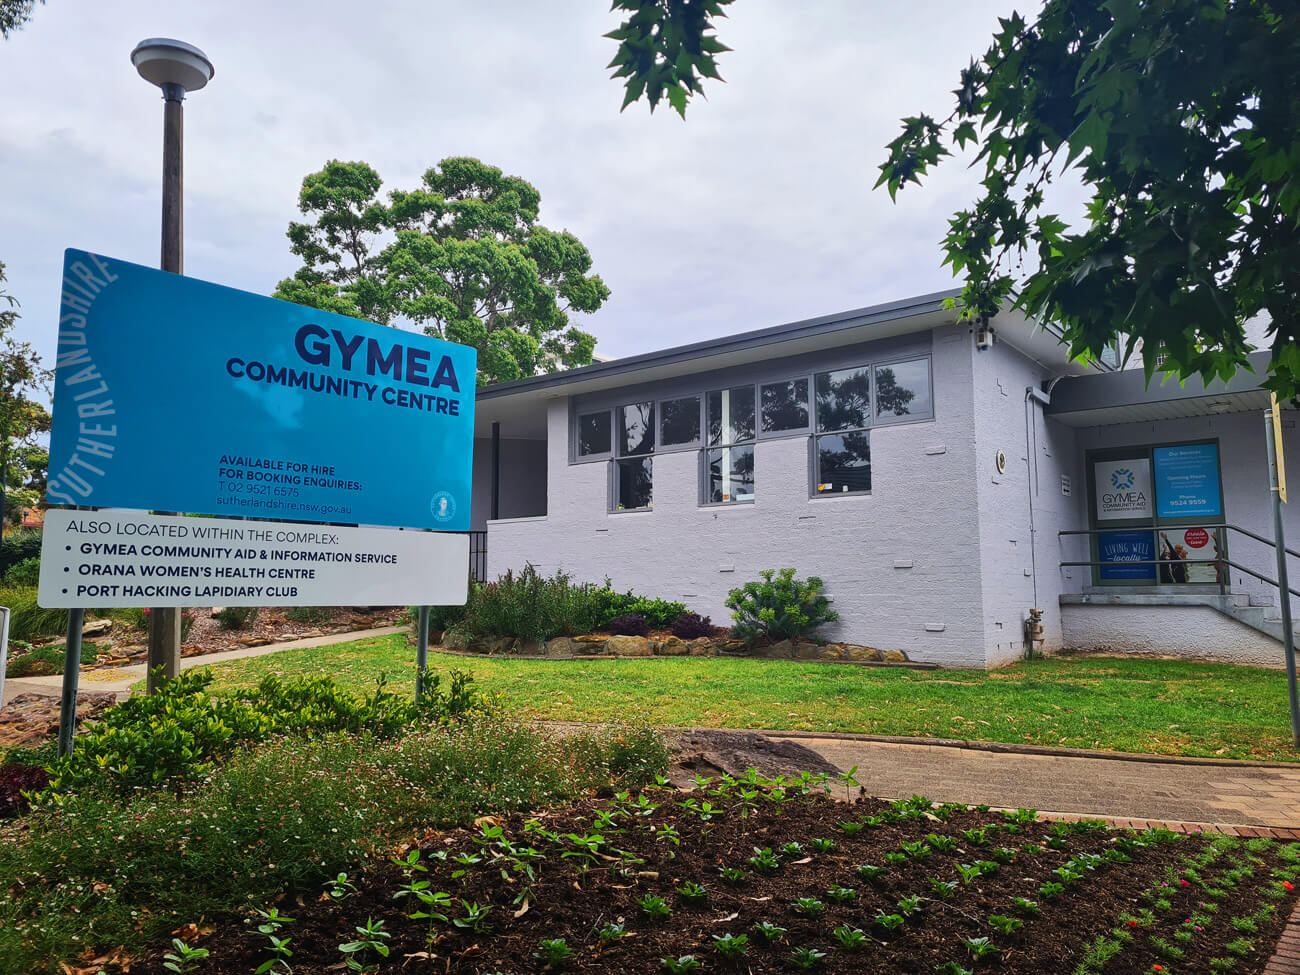 Gymea community centre